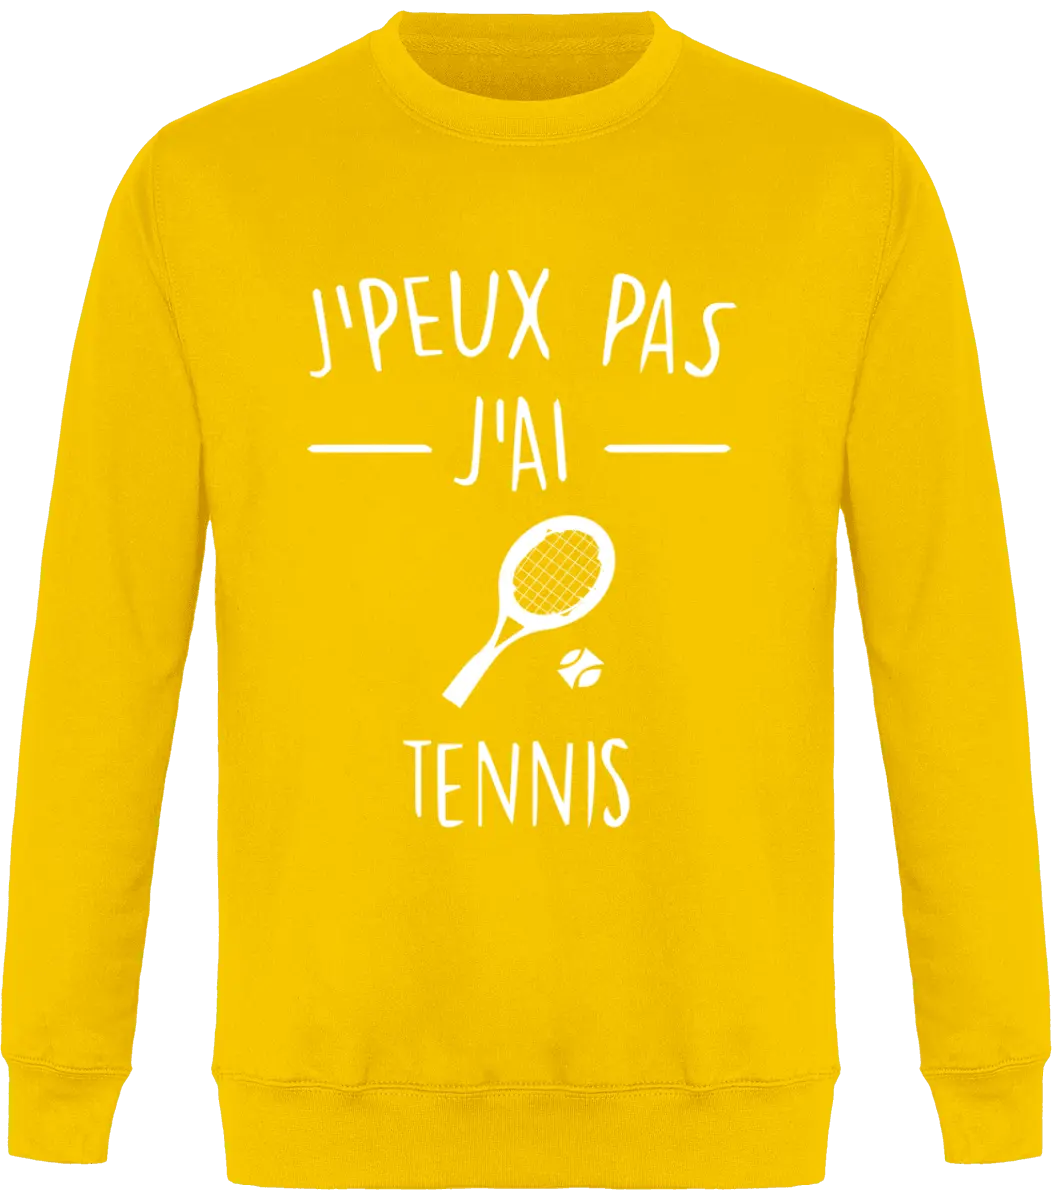 Sweat Tennis "J'peux pas j'ai tennis" | Mixte - French Humour